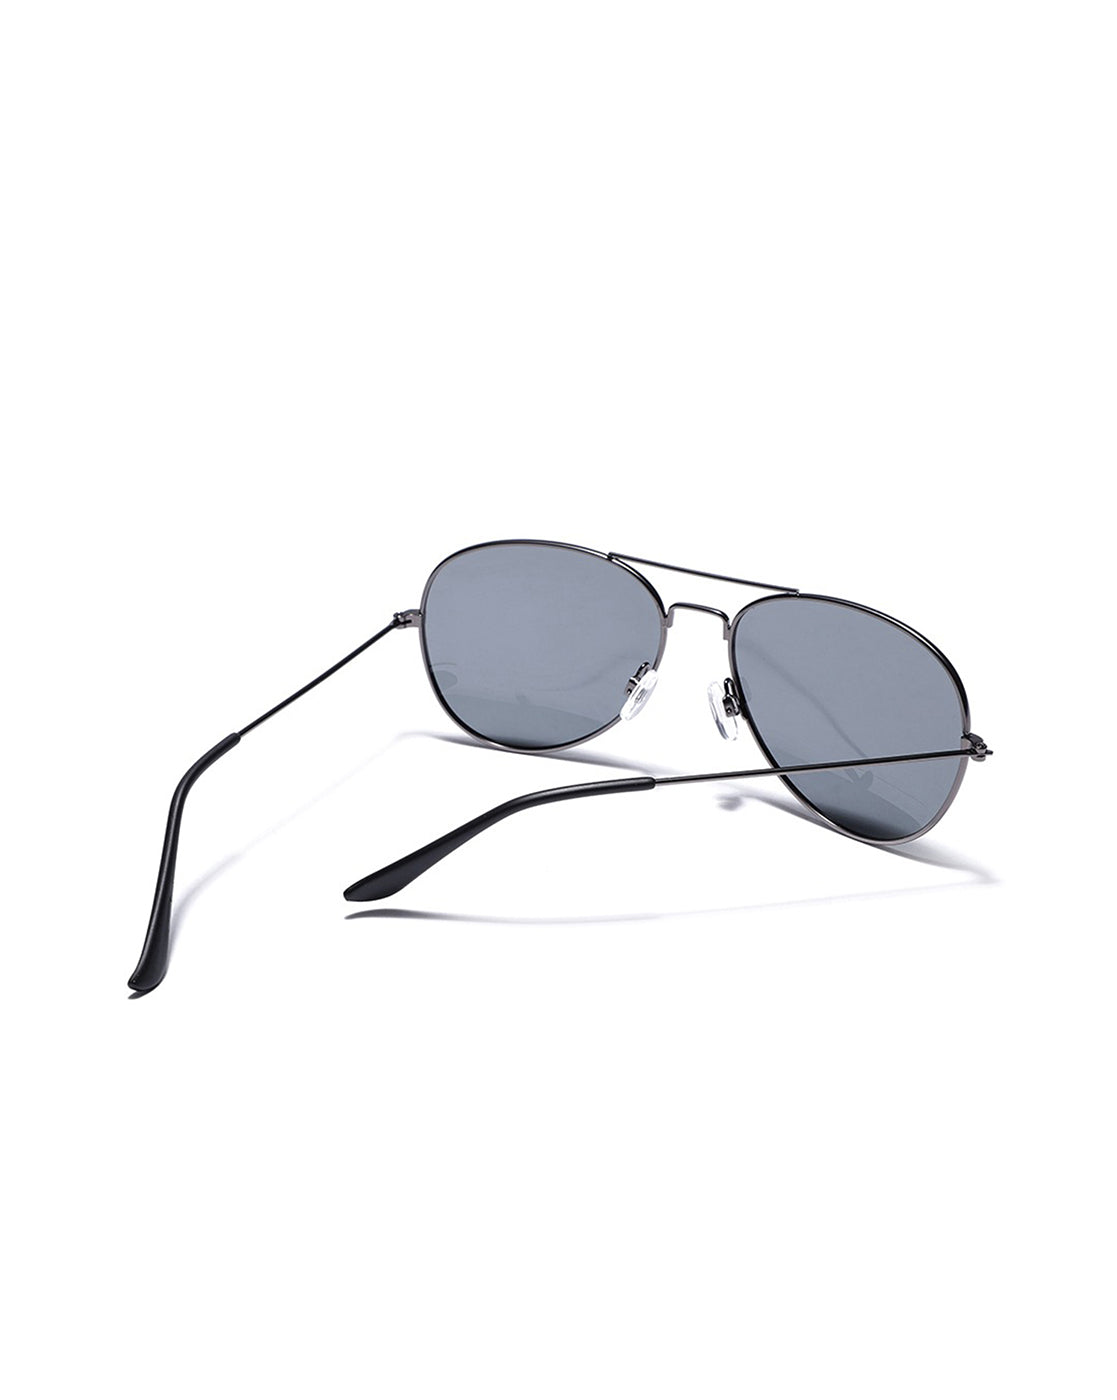 Carlton London Aviator Sunglasses With Uv Protected Lens For Men